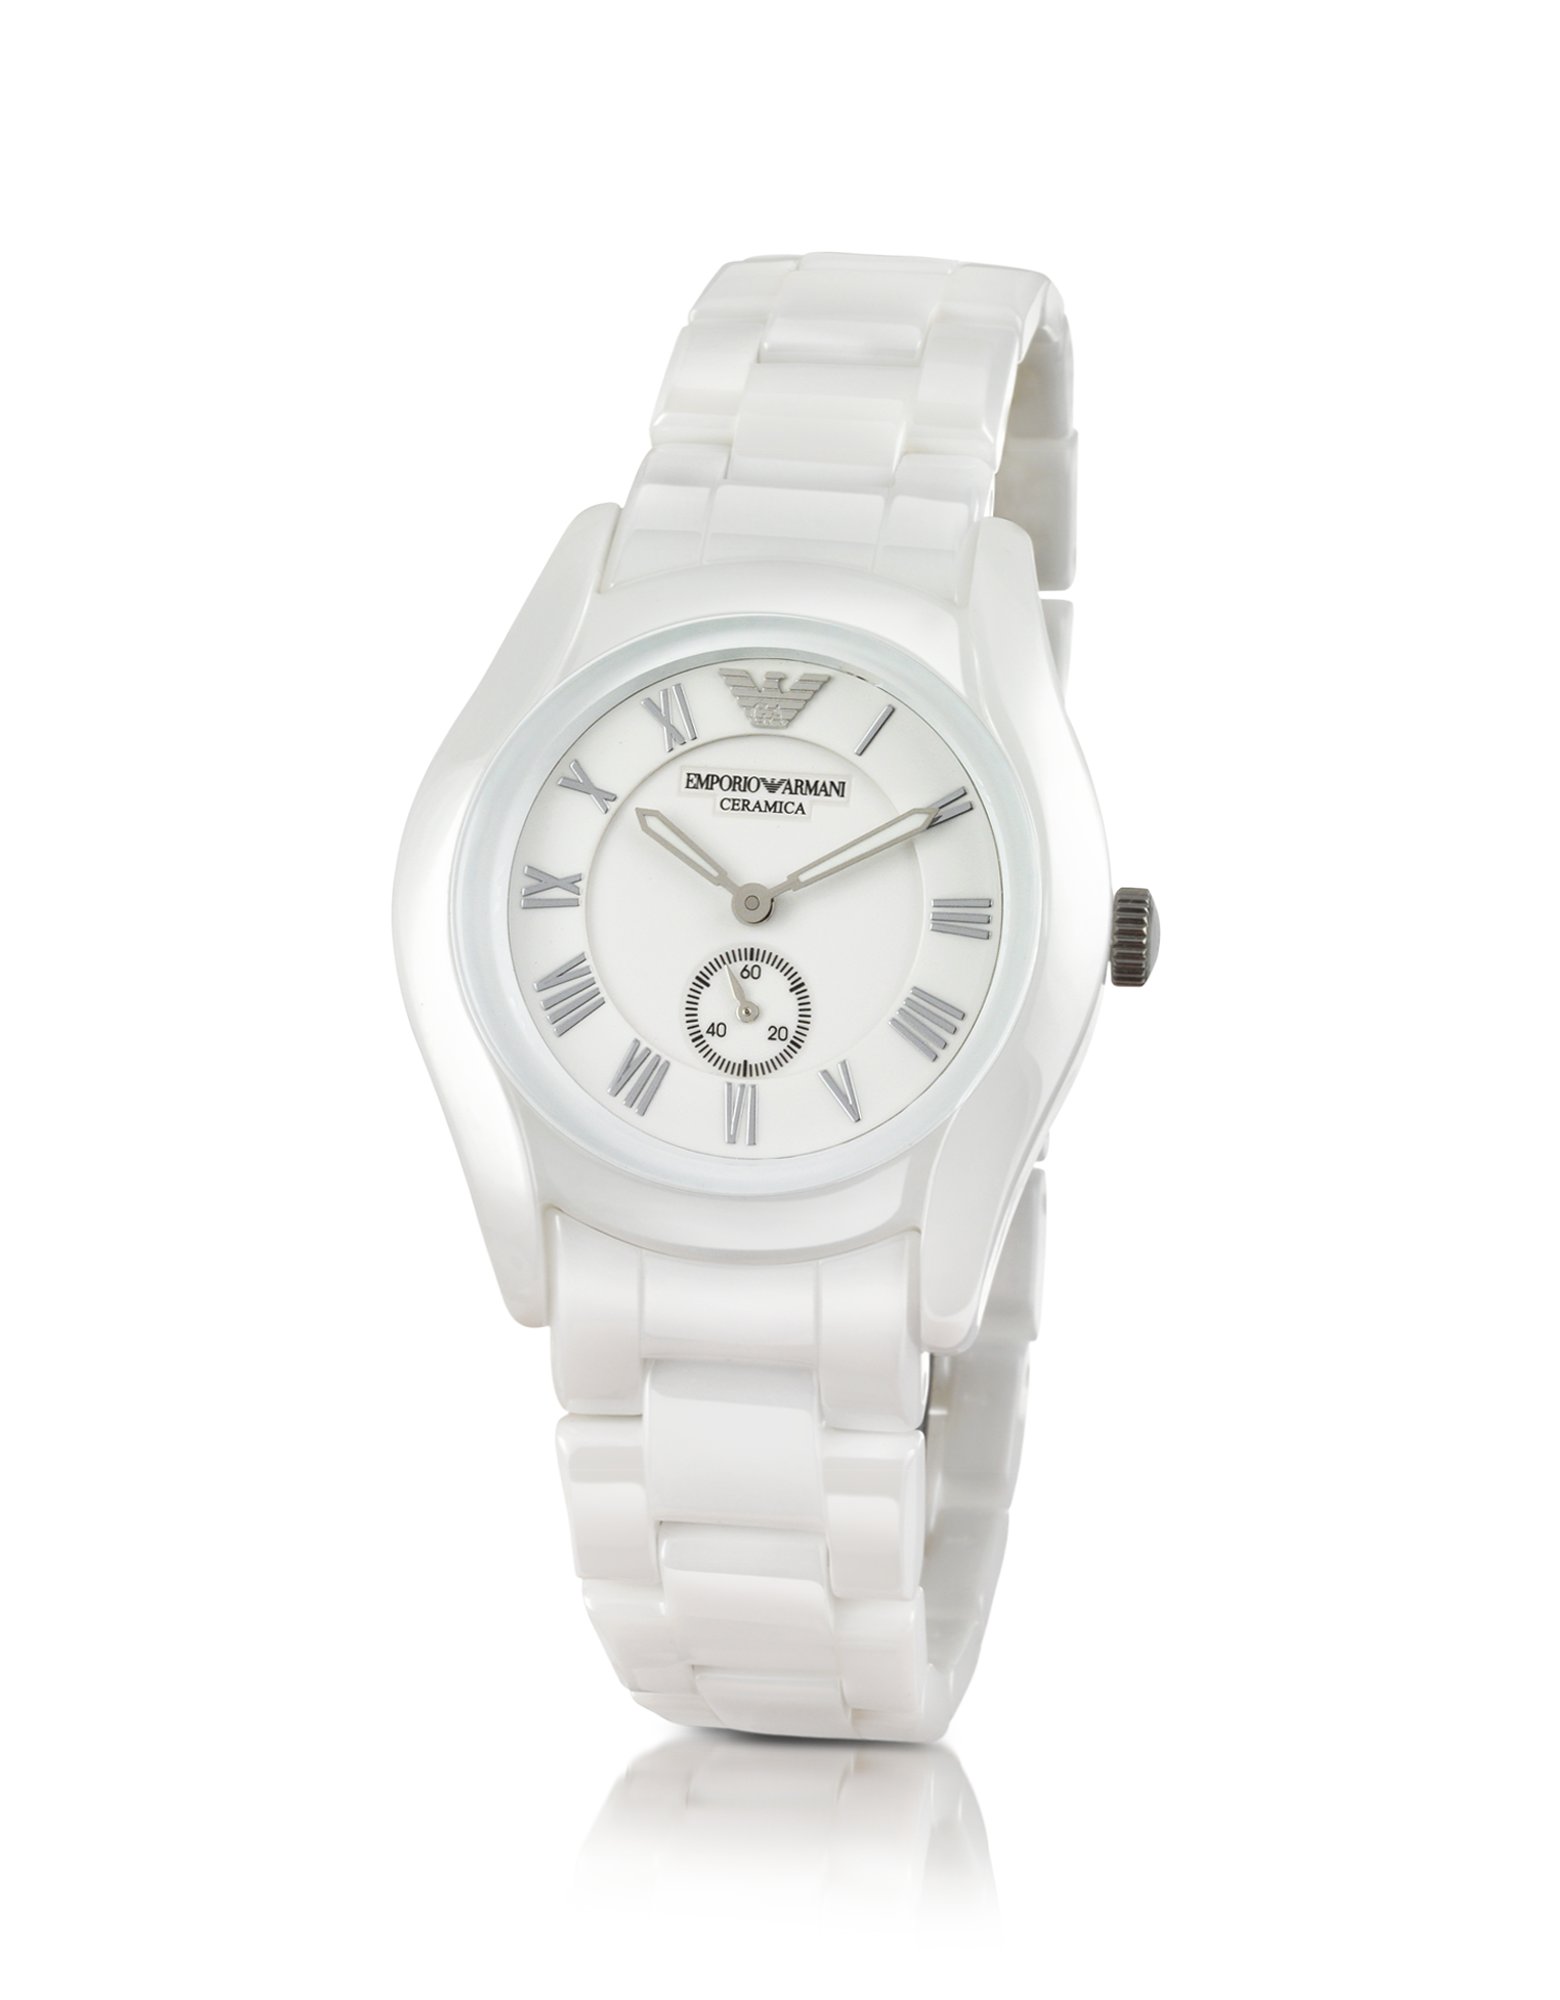 Lyst - Emporio Armani Womens White Ceramic Chrono Watch in White